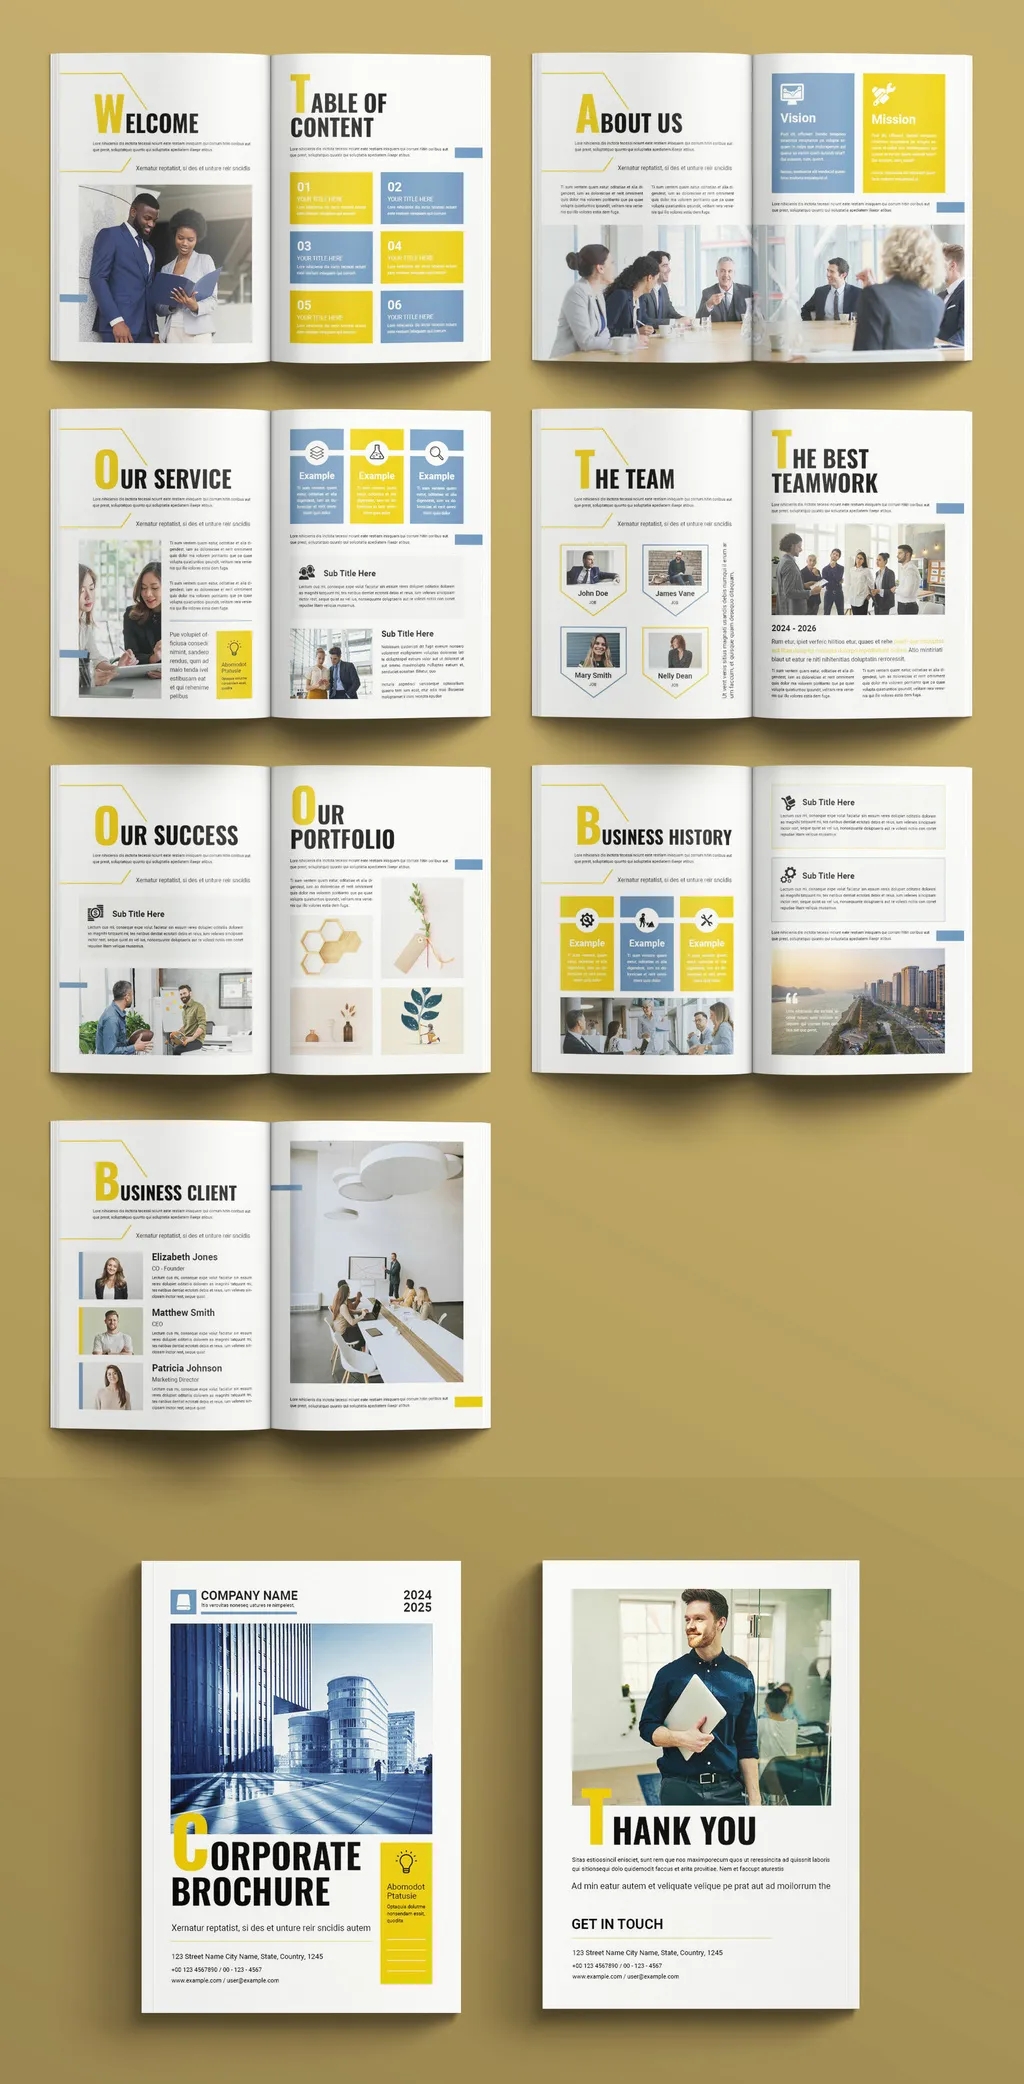 Adobestock - Corporate Brochure Layout Template 716694393